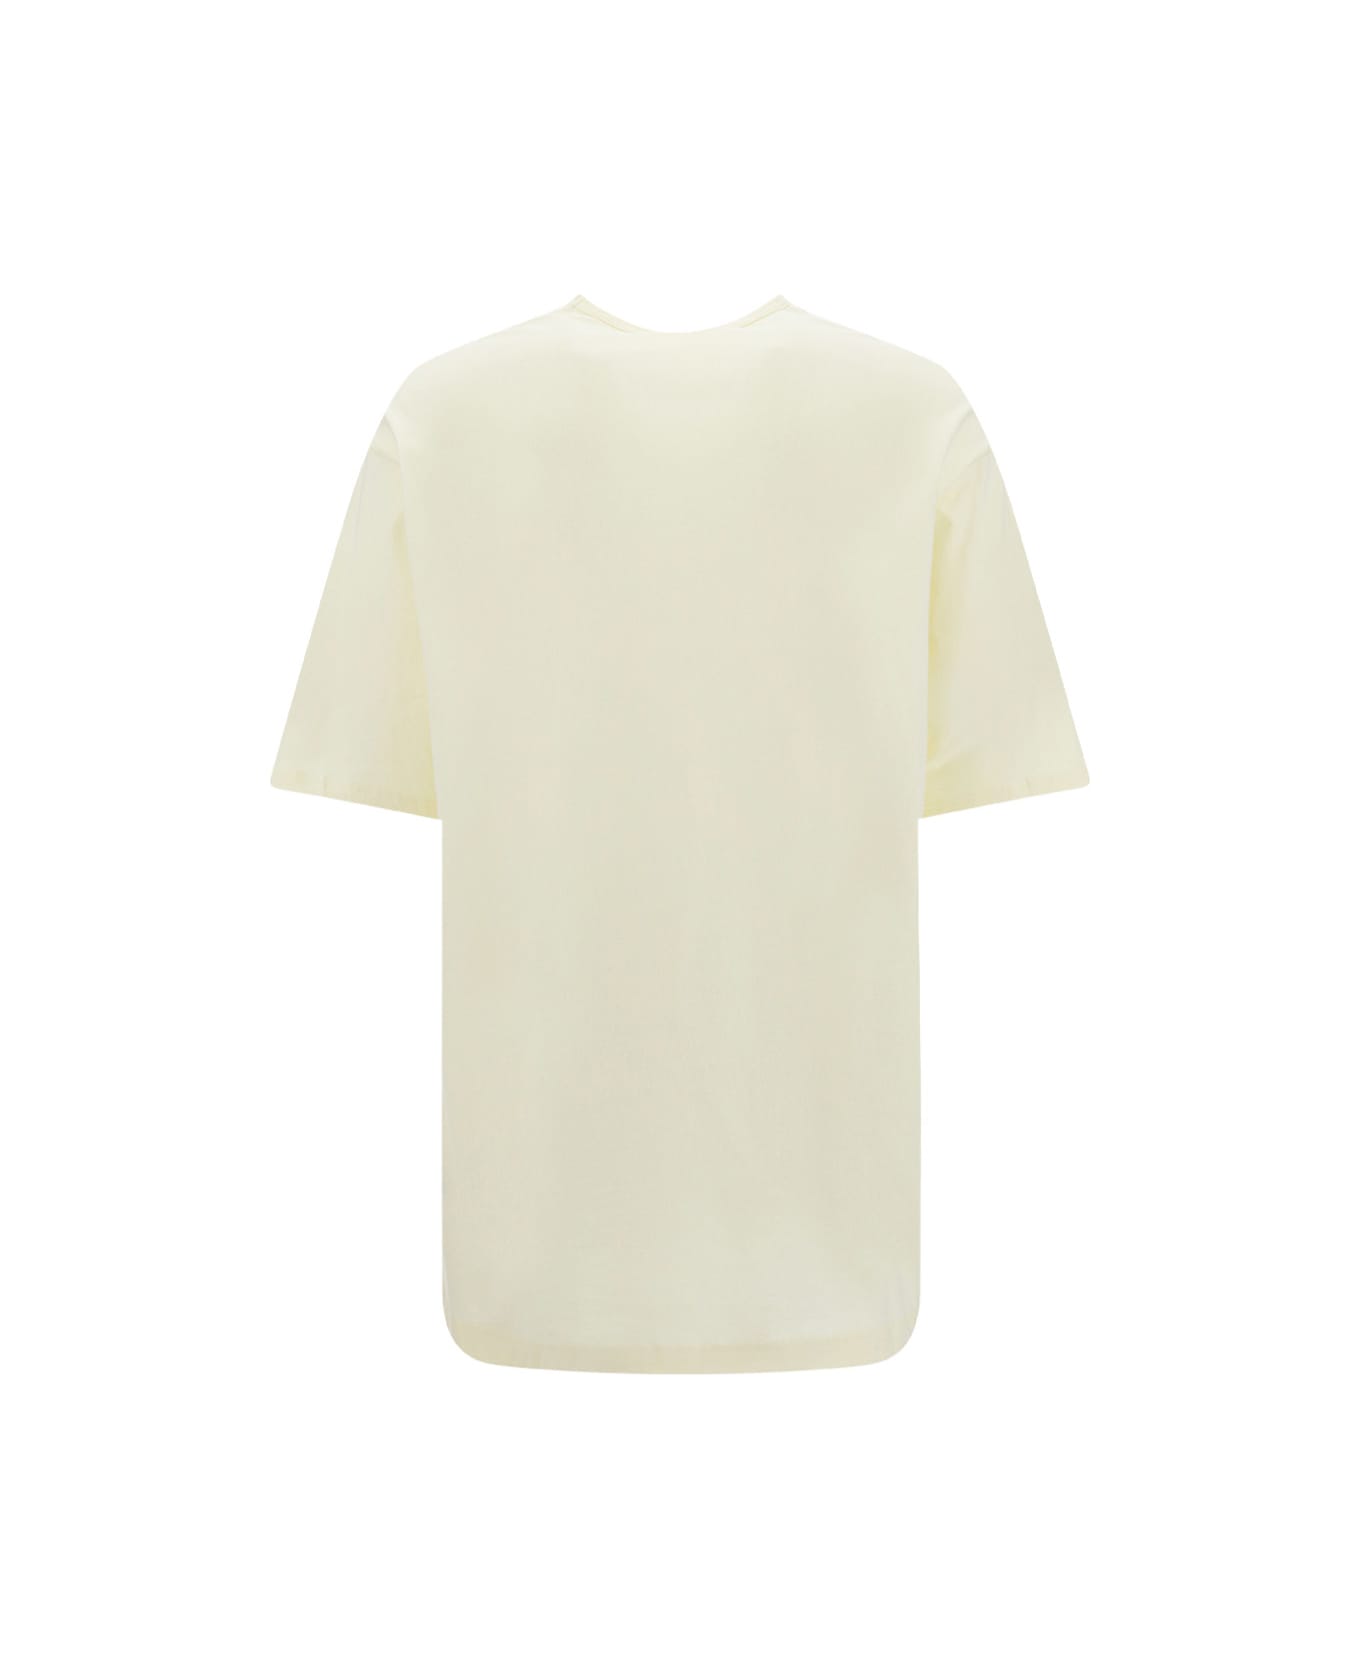 Y-3 Boxy T-shirt - Cream White